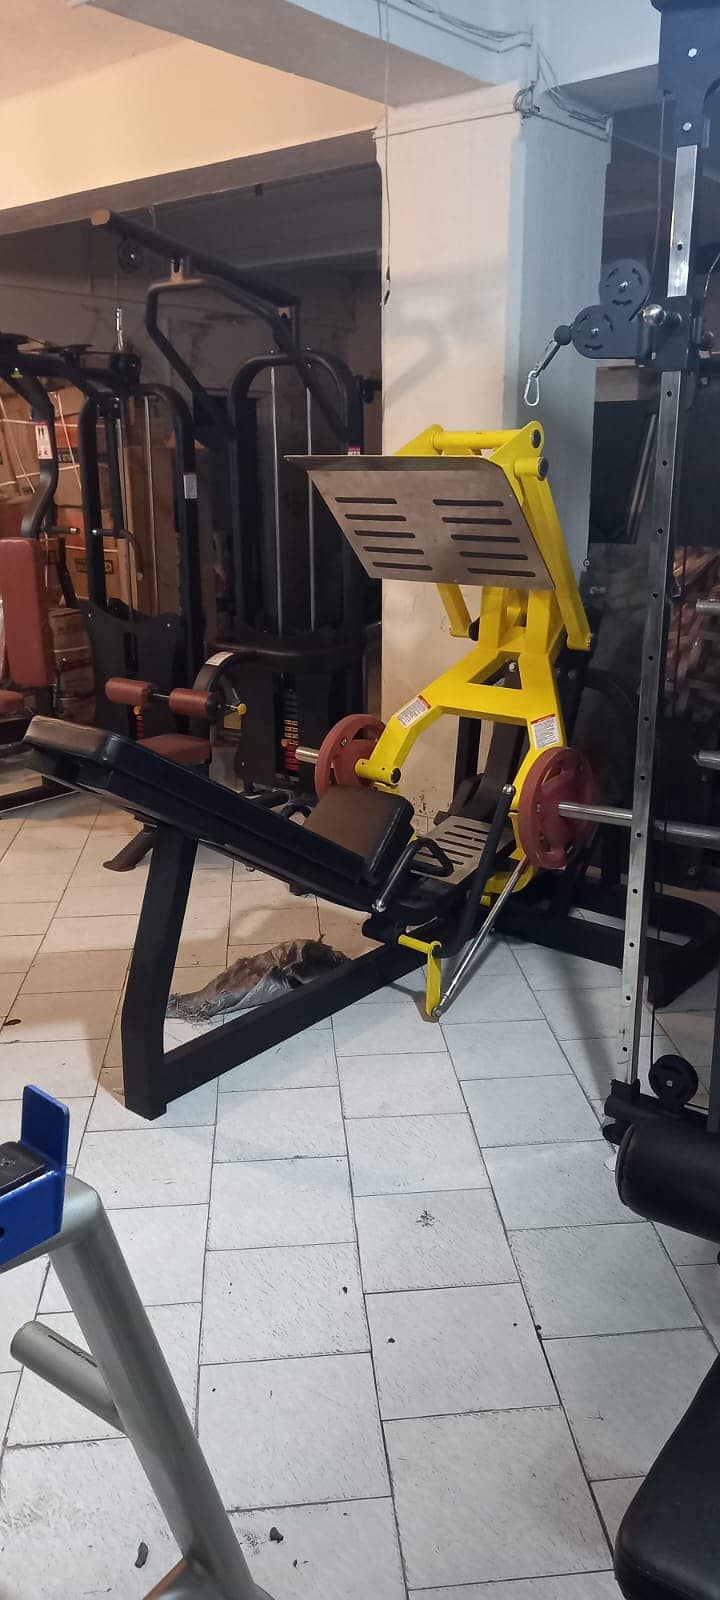 complete gym equipment setup Treadmill Elliptical dumbbell plate rod 2